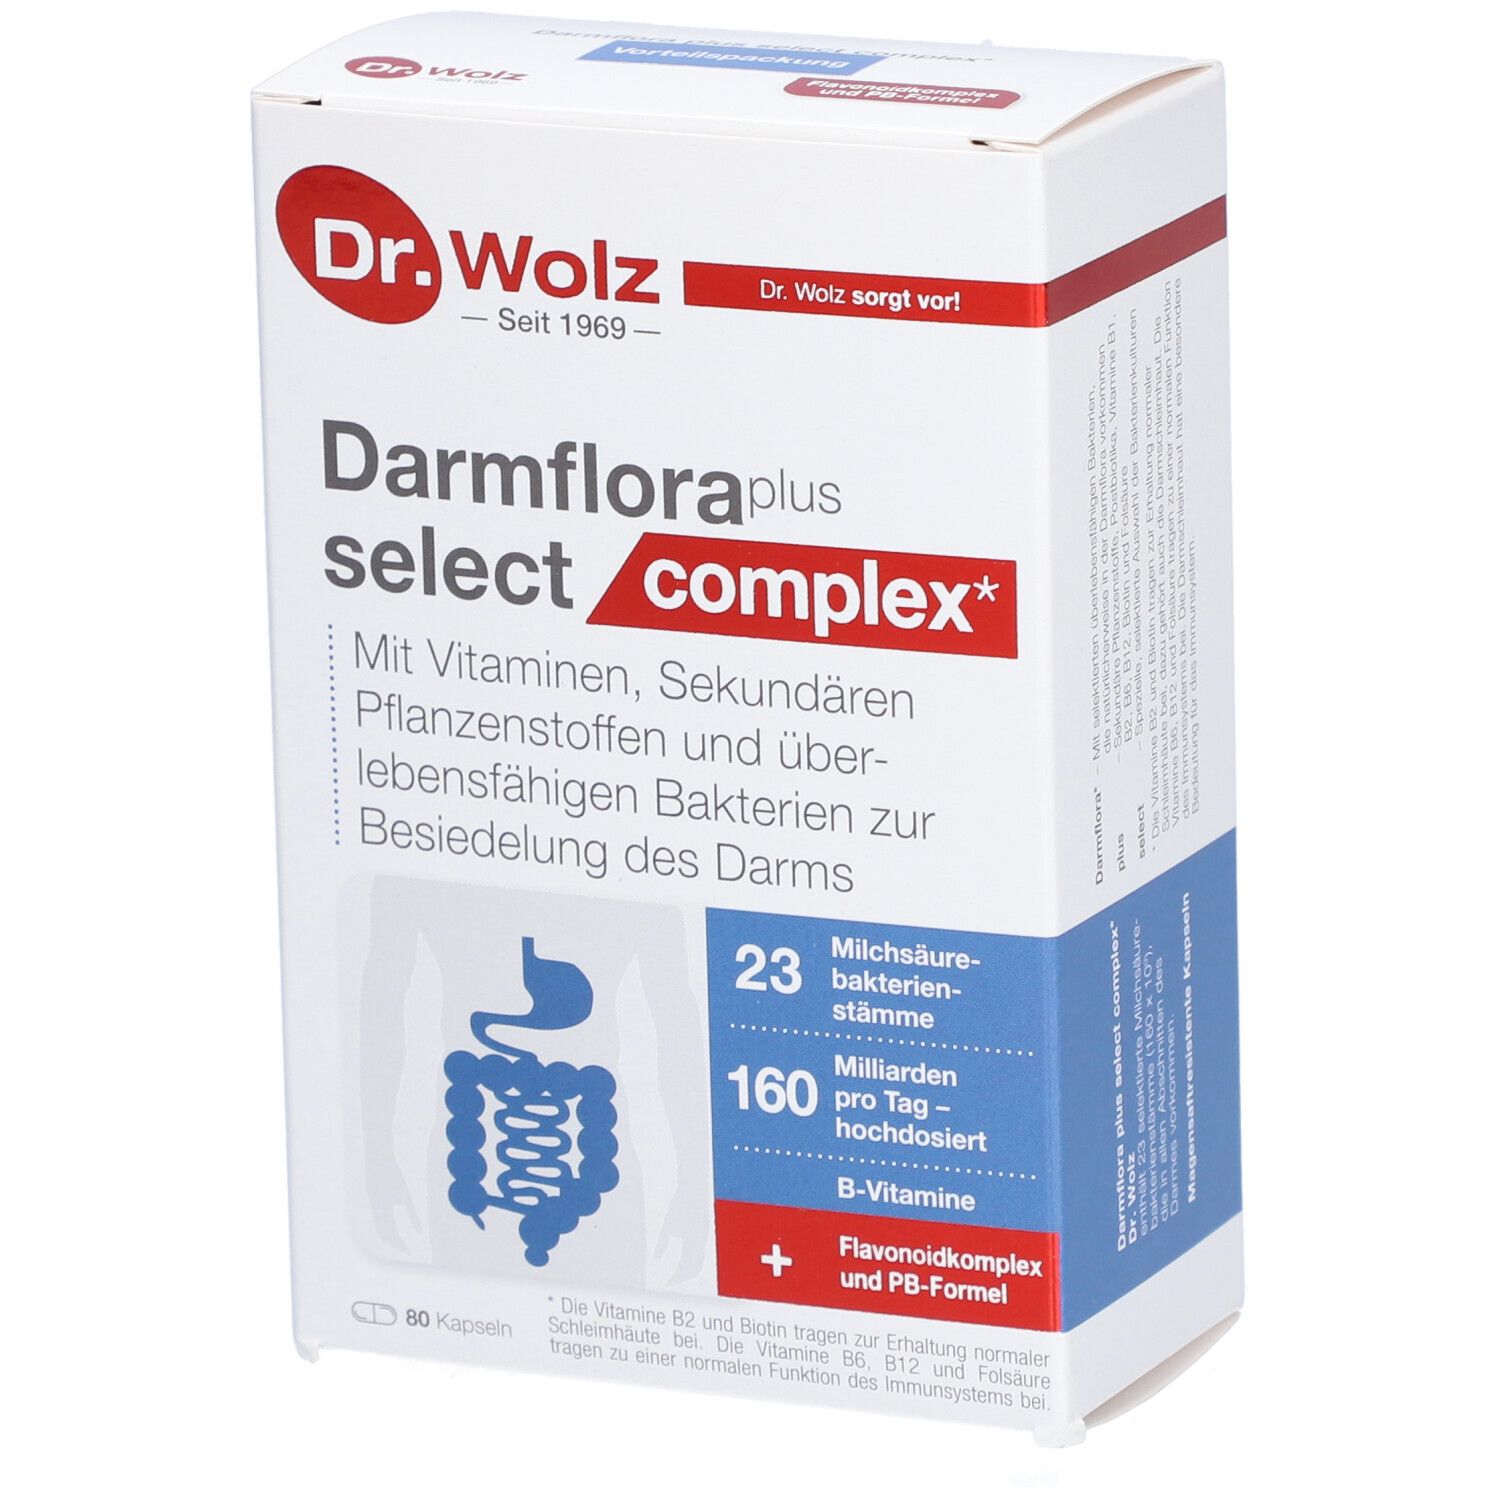 Dr. Wolz Darmflora select complex*